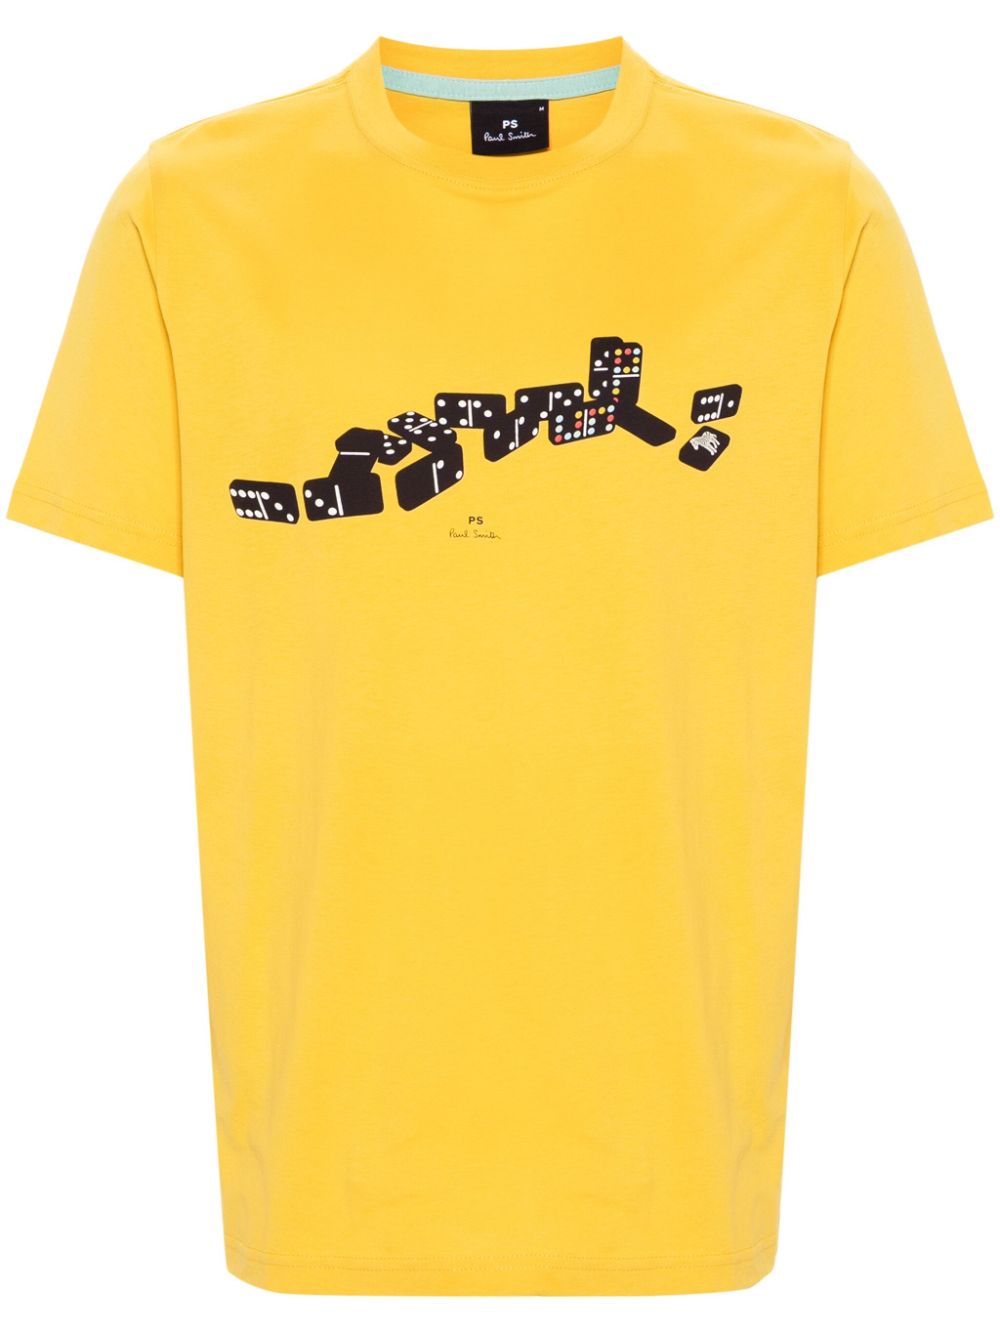 Dominoes-print cotton T-shirt